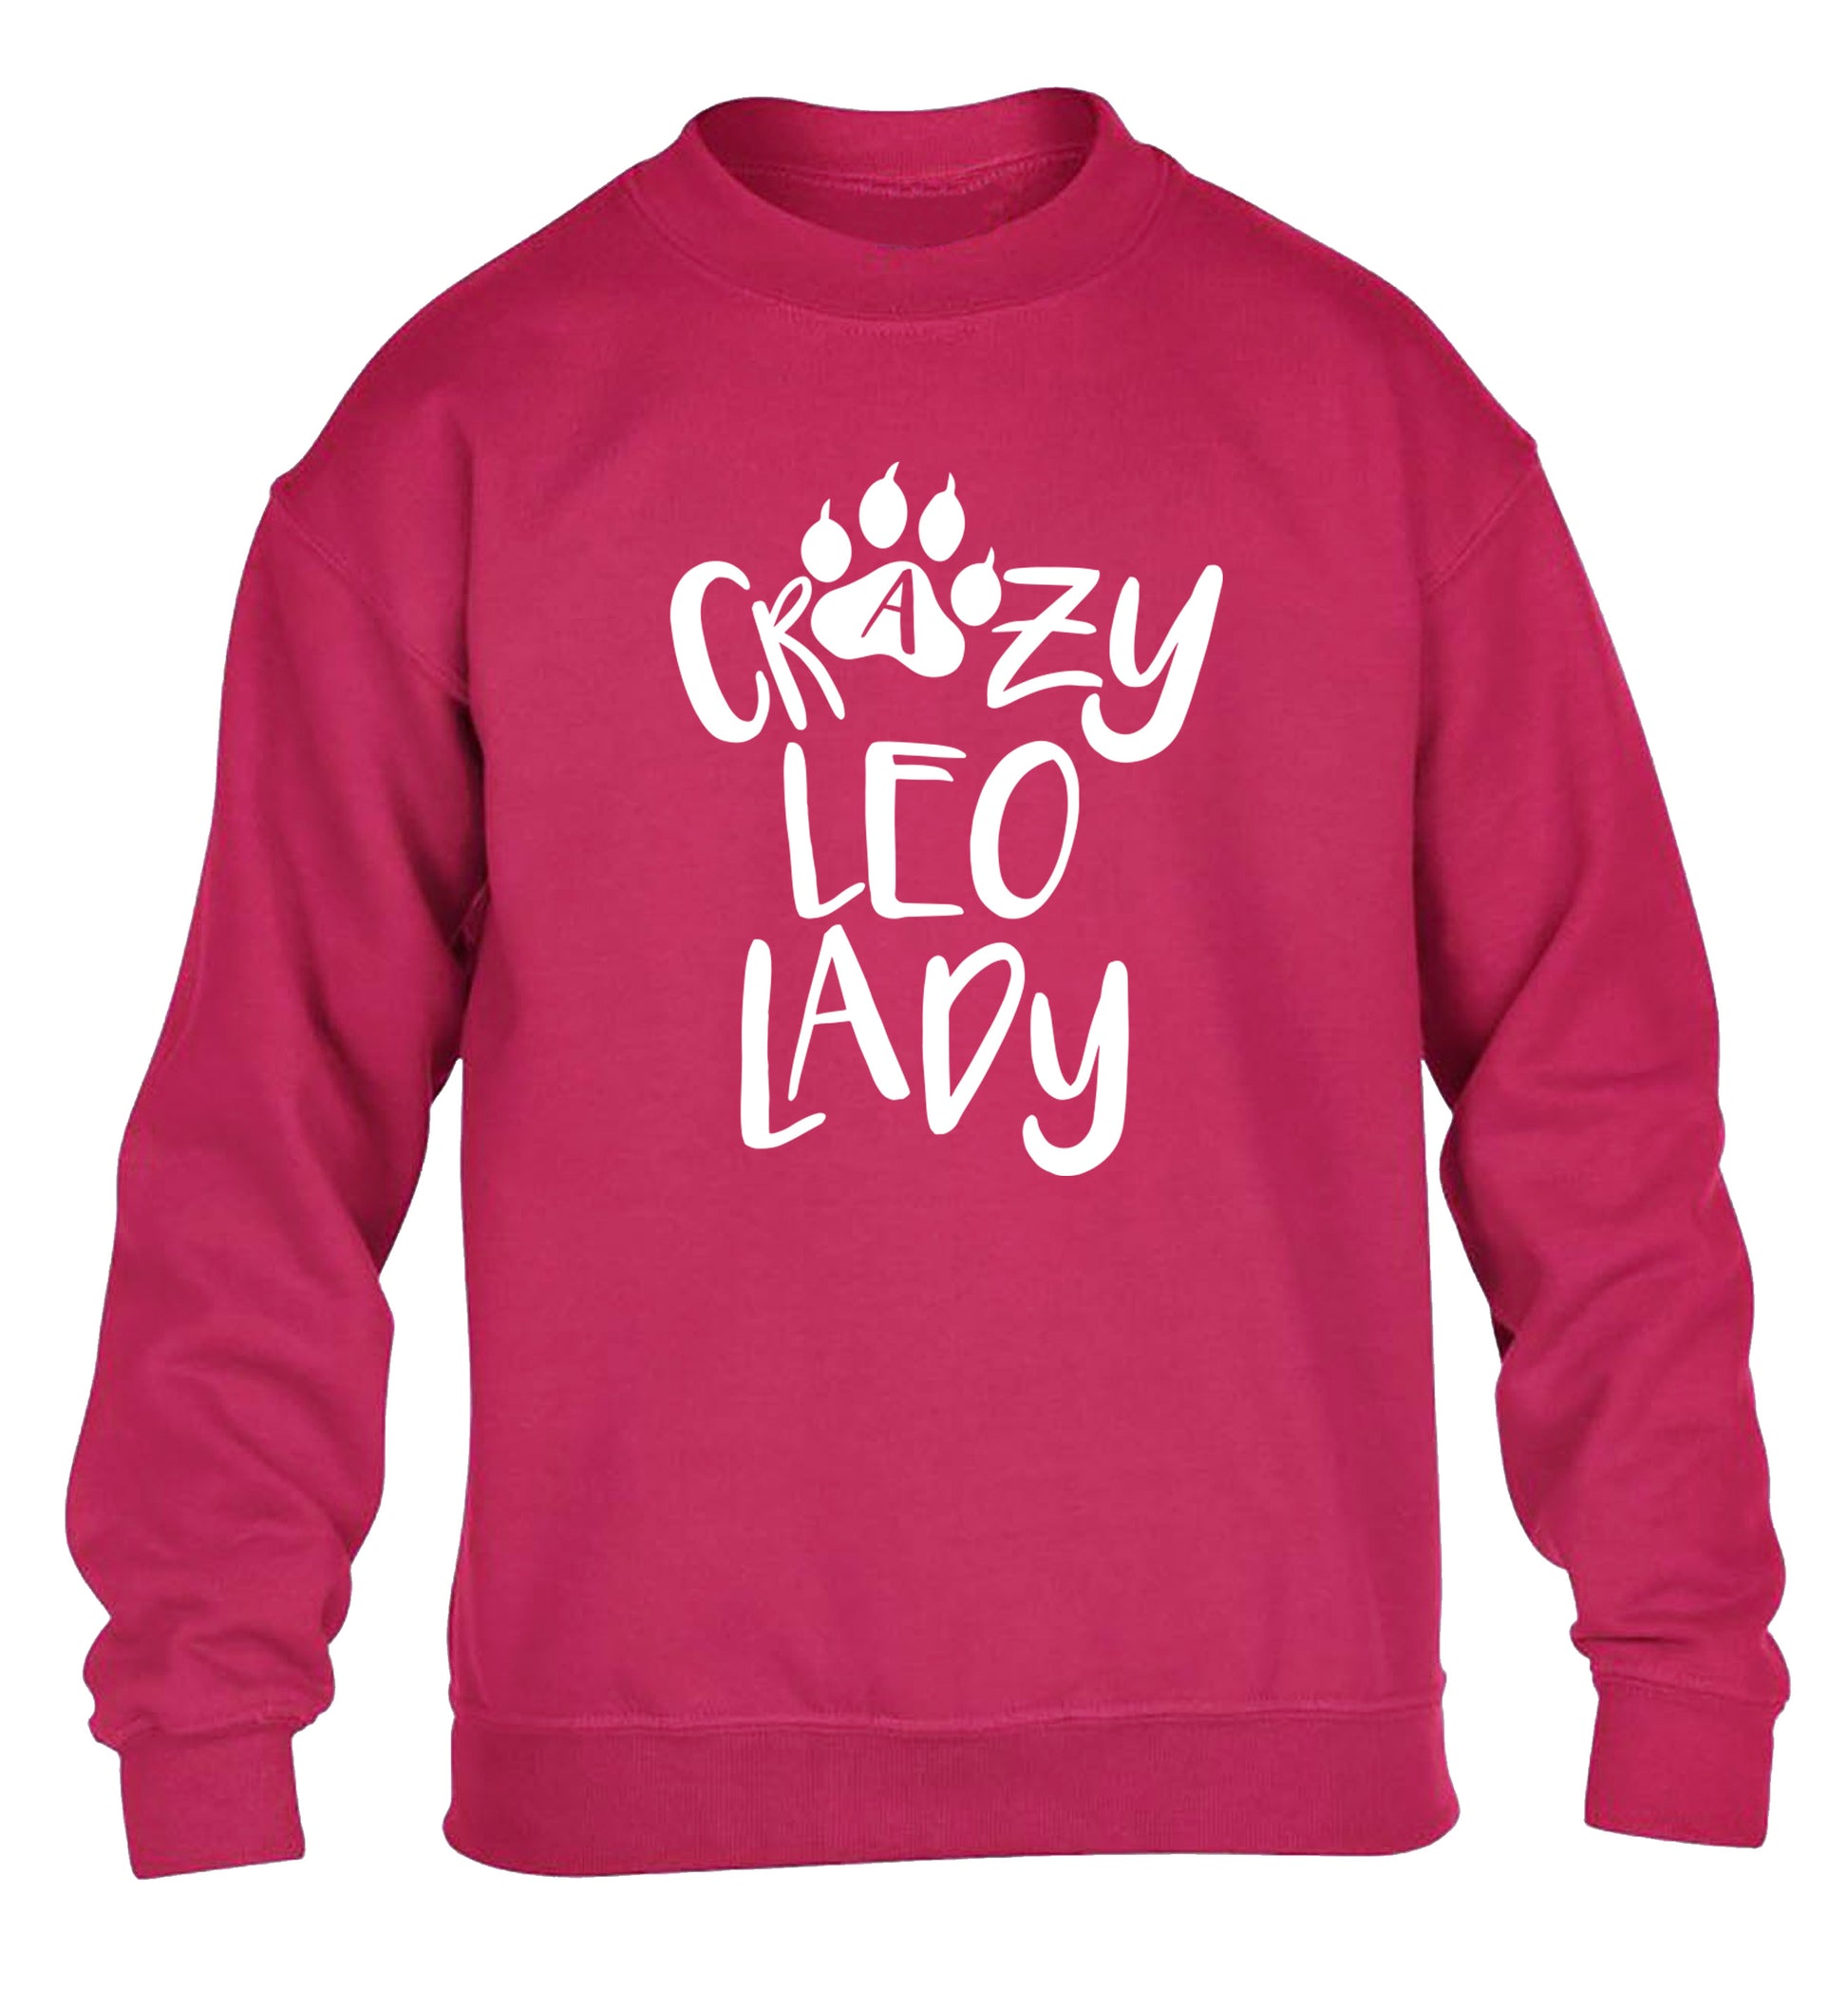 Crazy leo lady children's pink sweater 12-13 Years